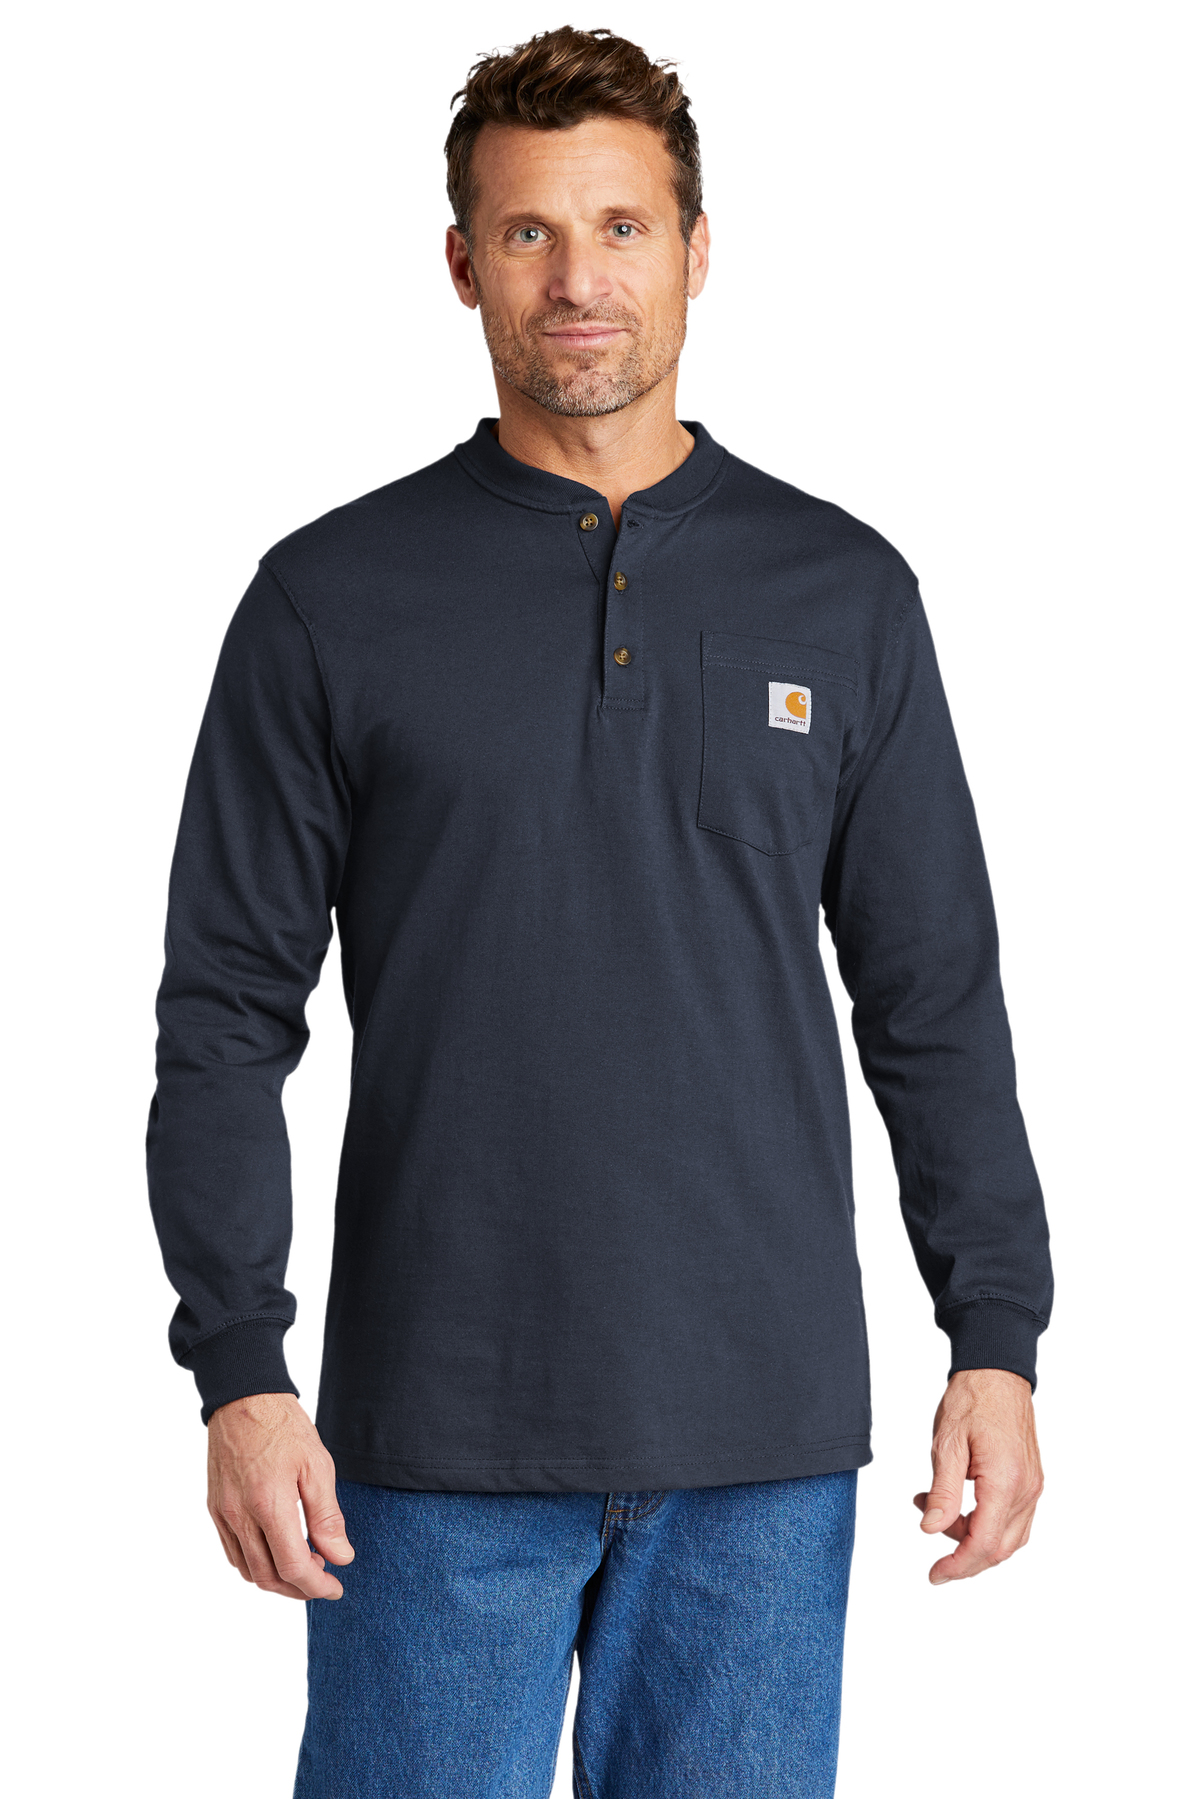 Carhartt Embroidered Men's Long Sleeve Henley T-Shirt - Queensboro